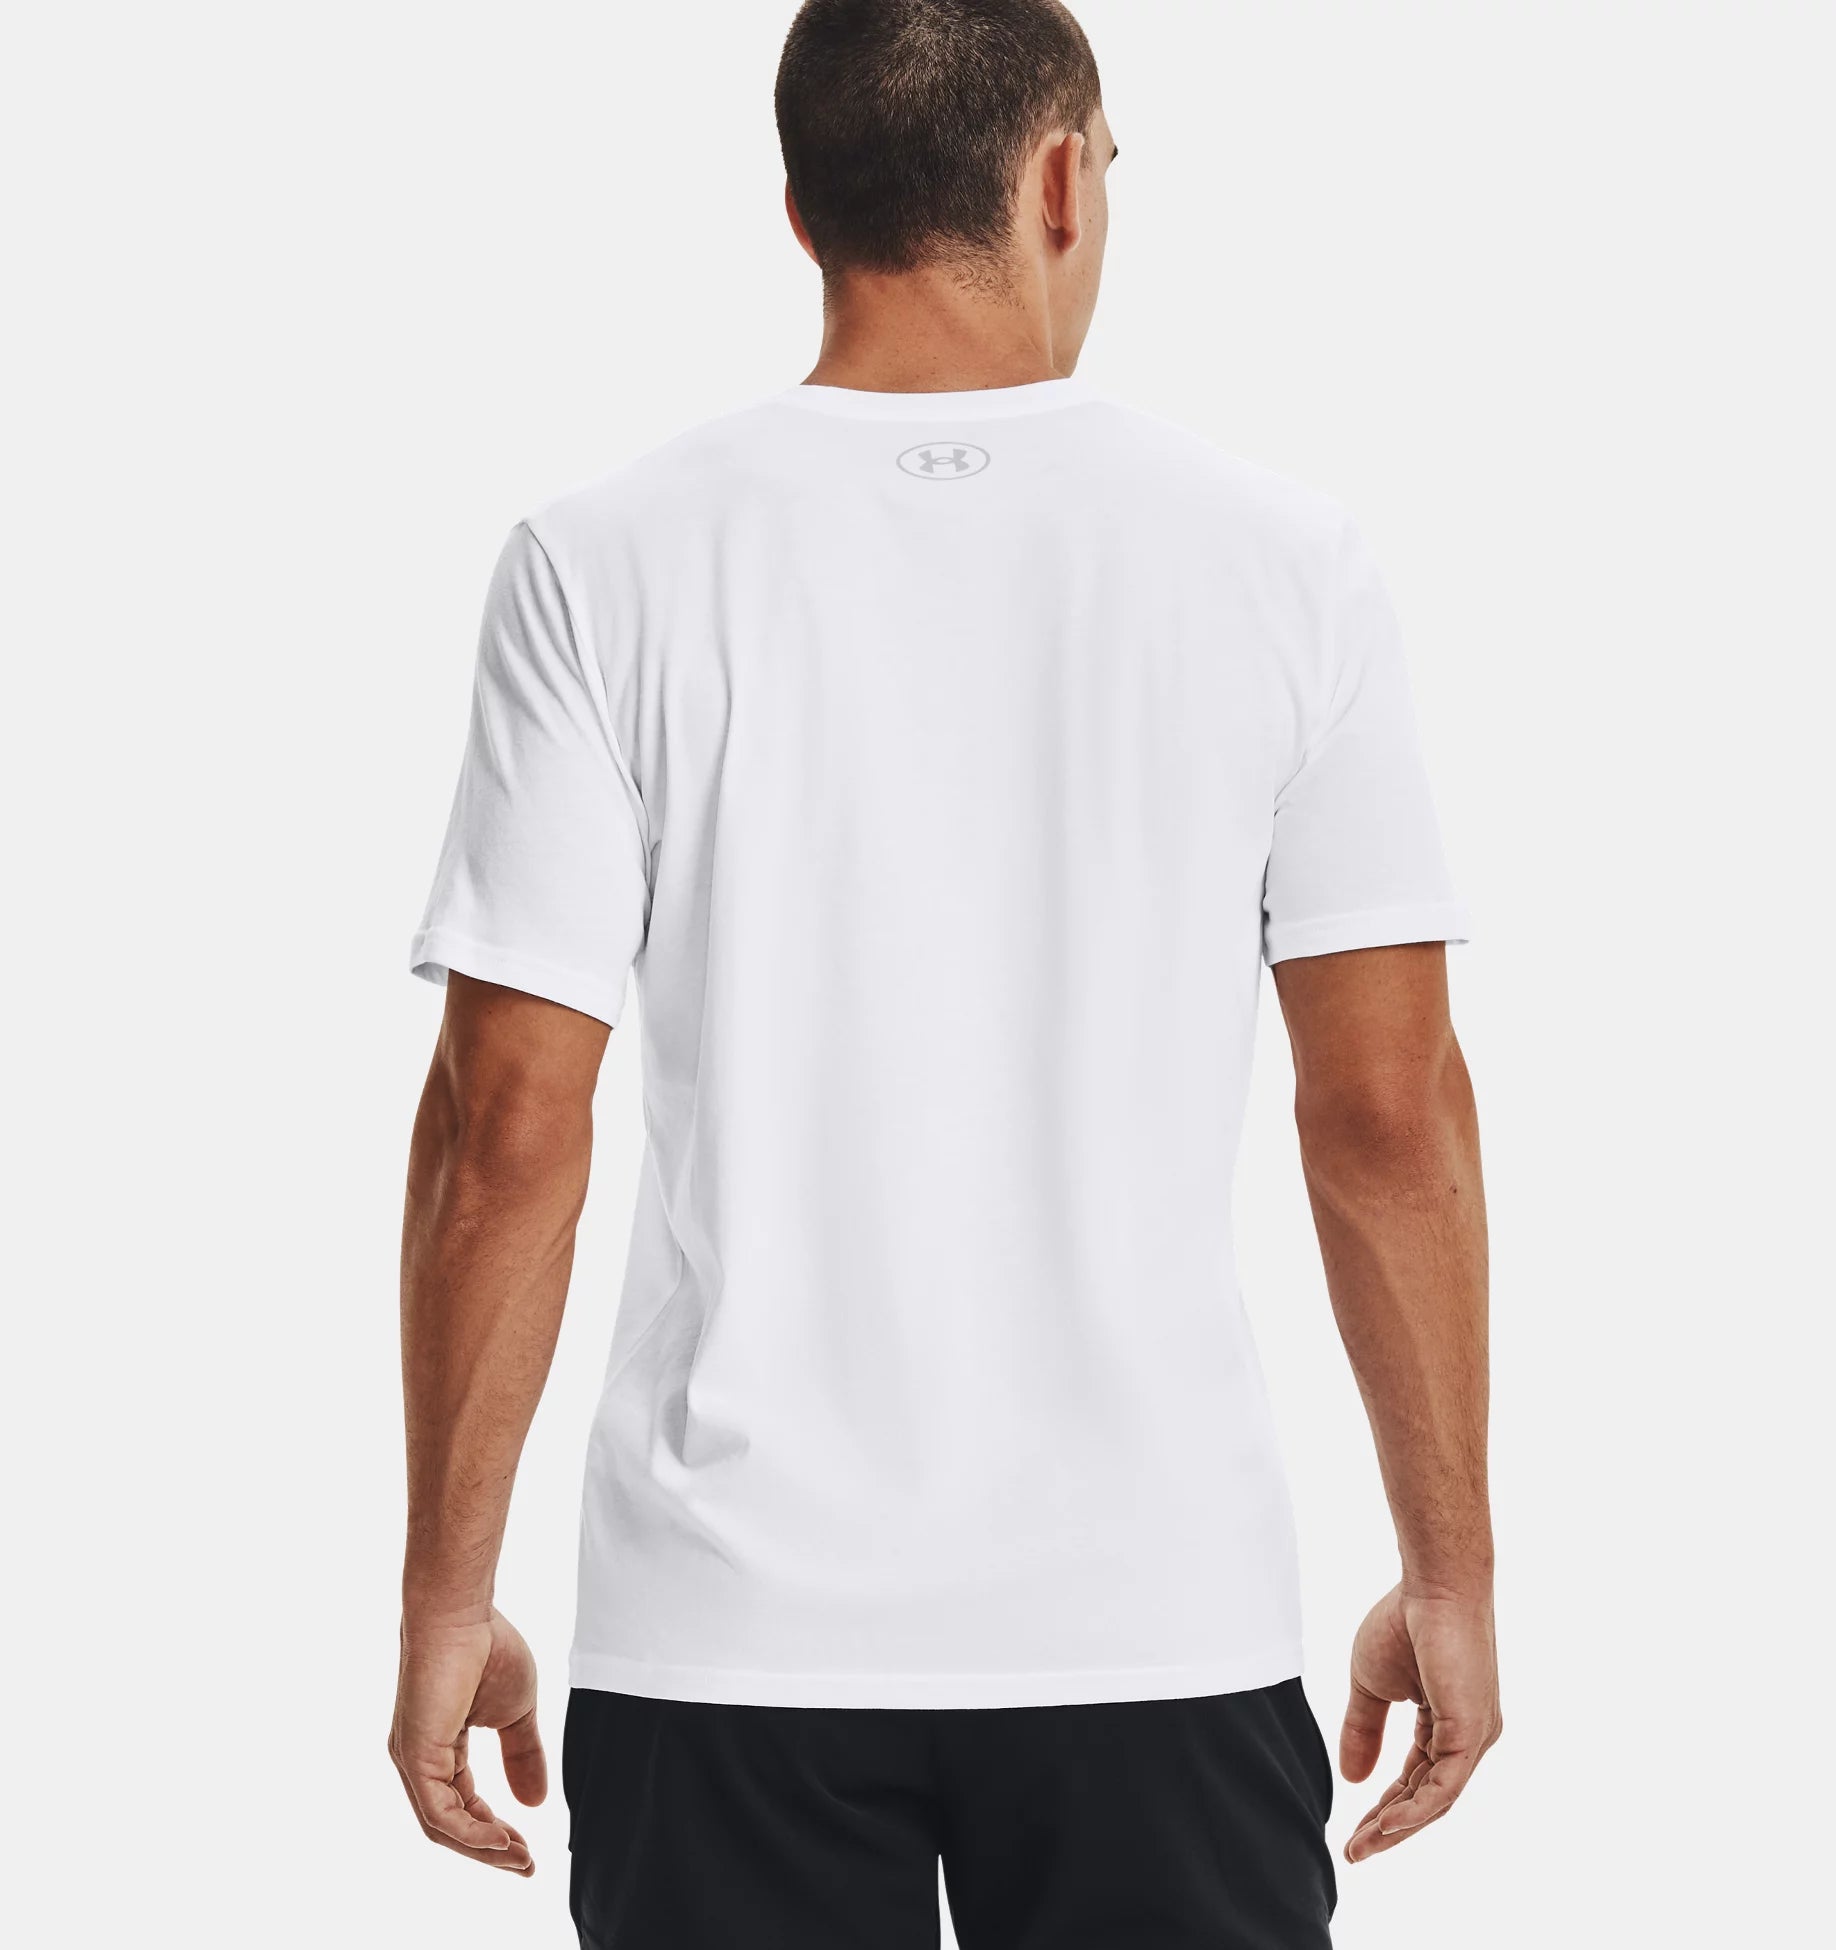 Under Armor Sportstyle Logo T-Shirt - White/Black